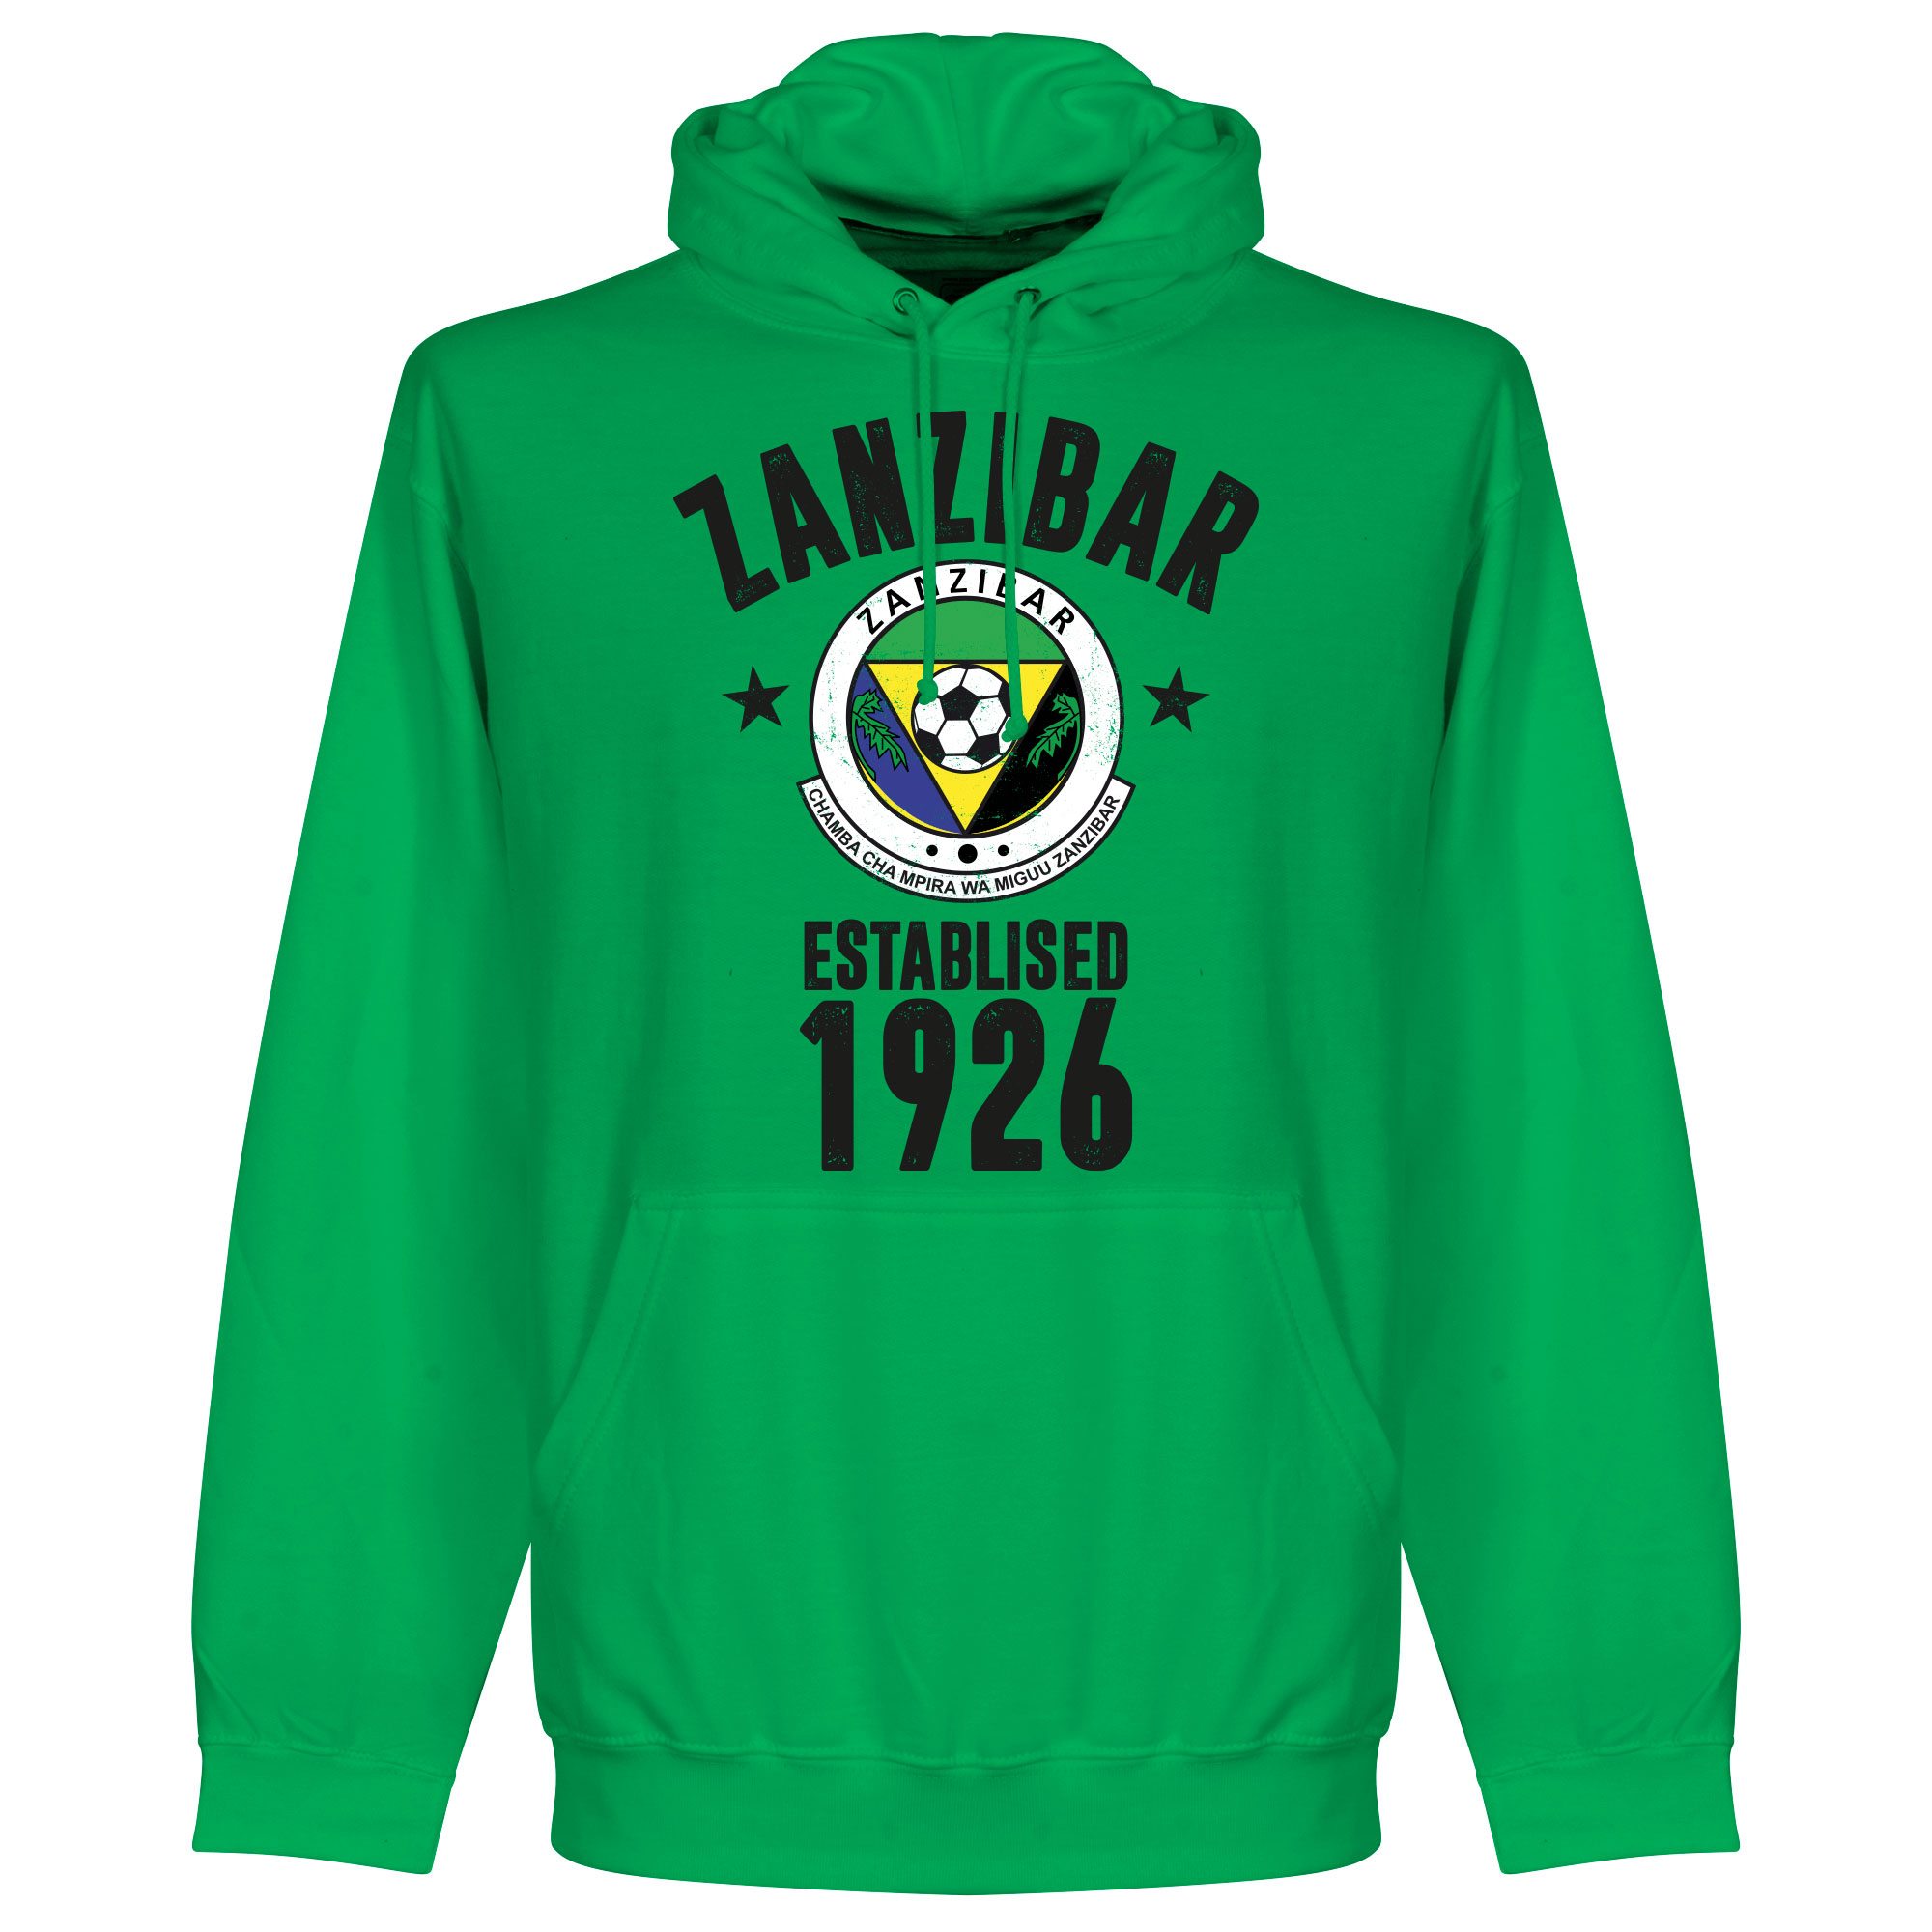 Zanzibar Established Hooded Sweater Groen